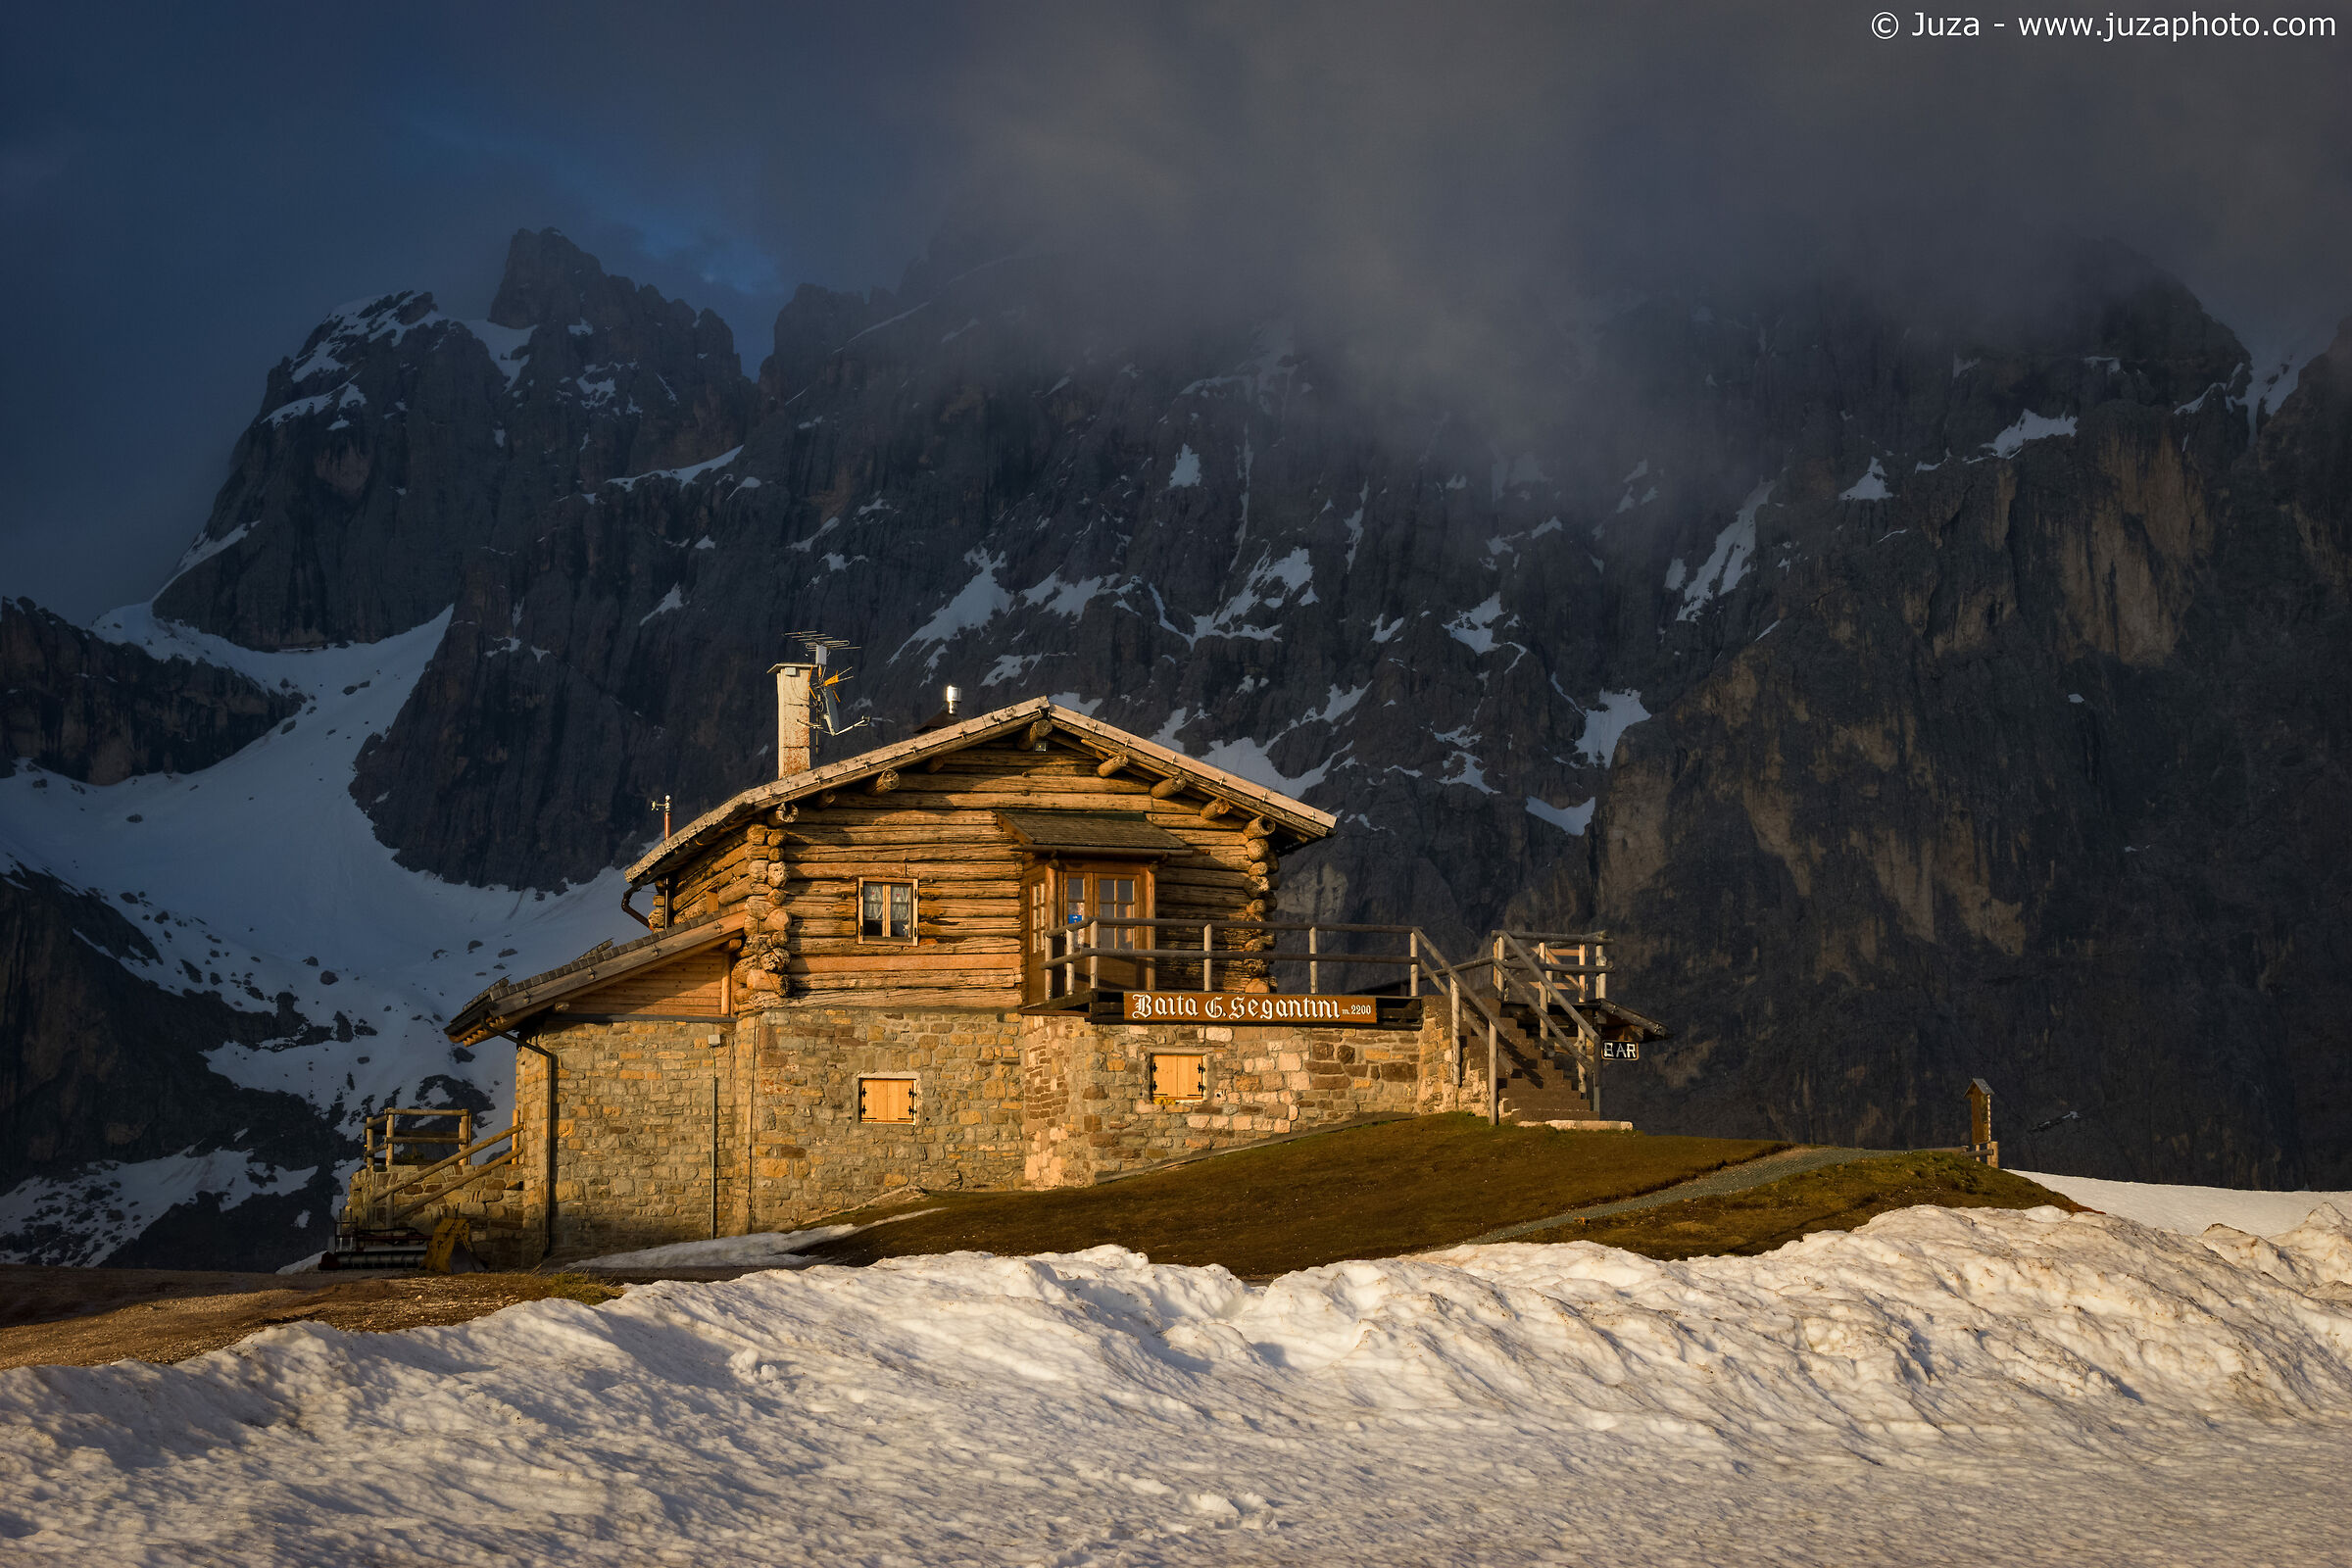 The Hut Segantini...